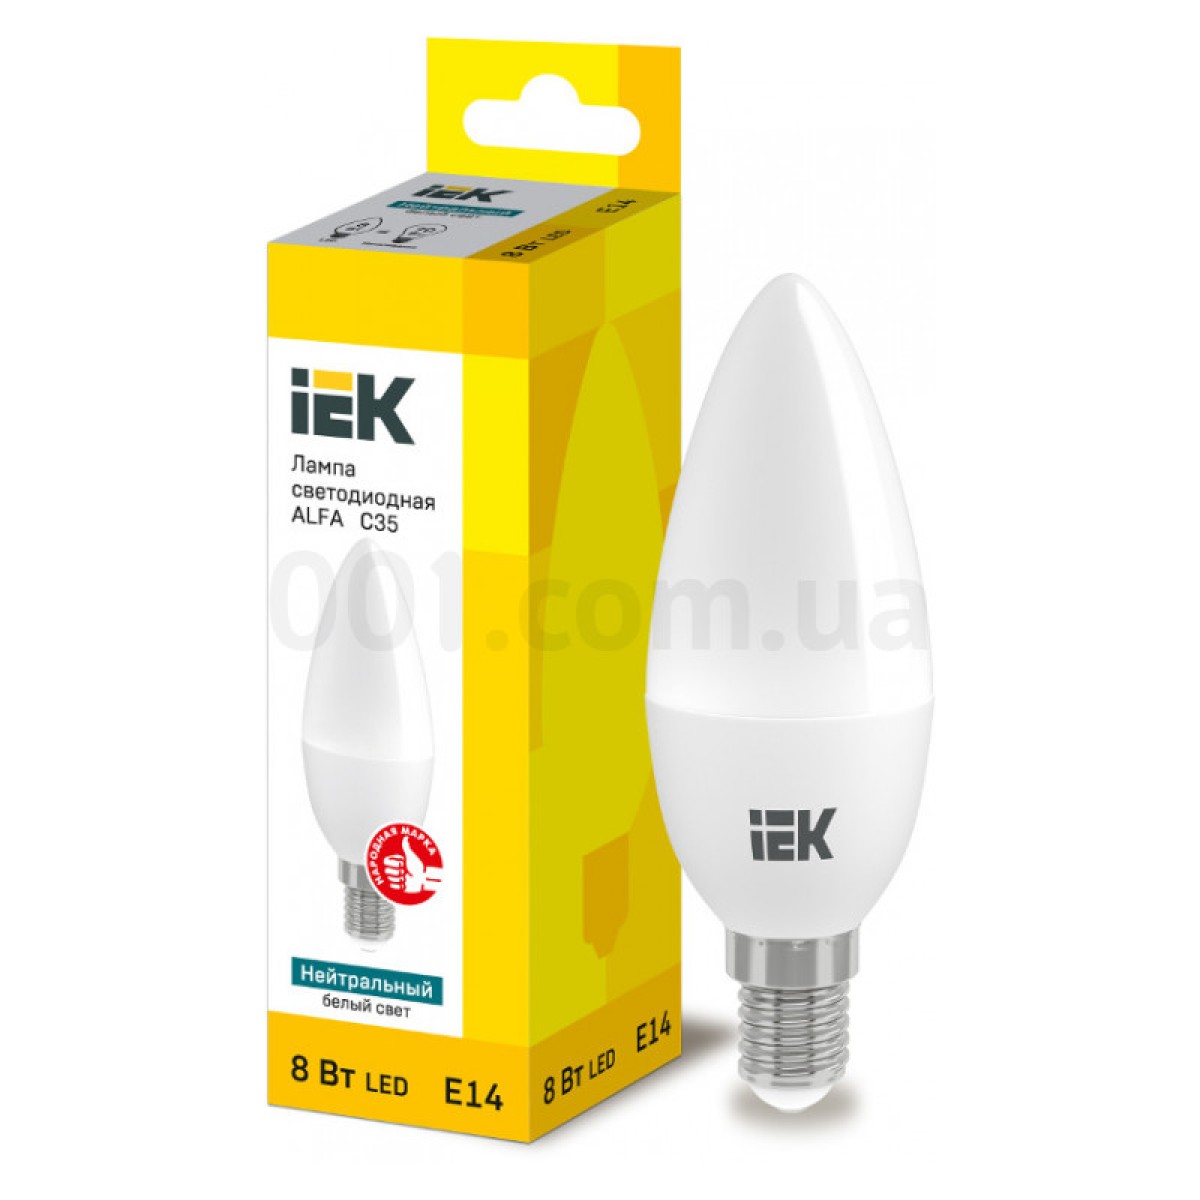 Светодиодная лампа LED ALFA C35 (свеча) 8 Вт 230В 4000К E14, IEK 256_256.jpg